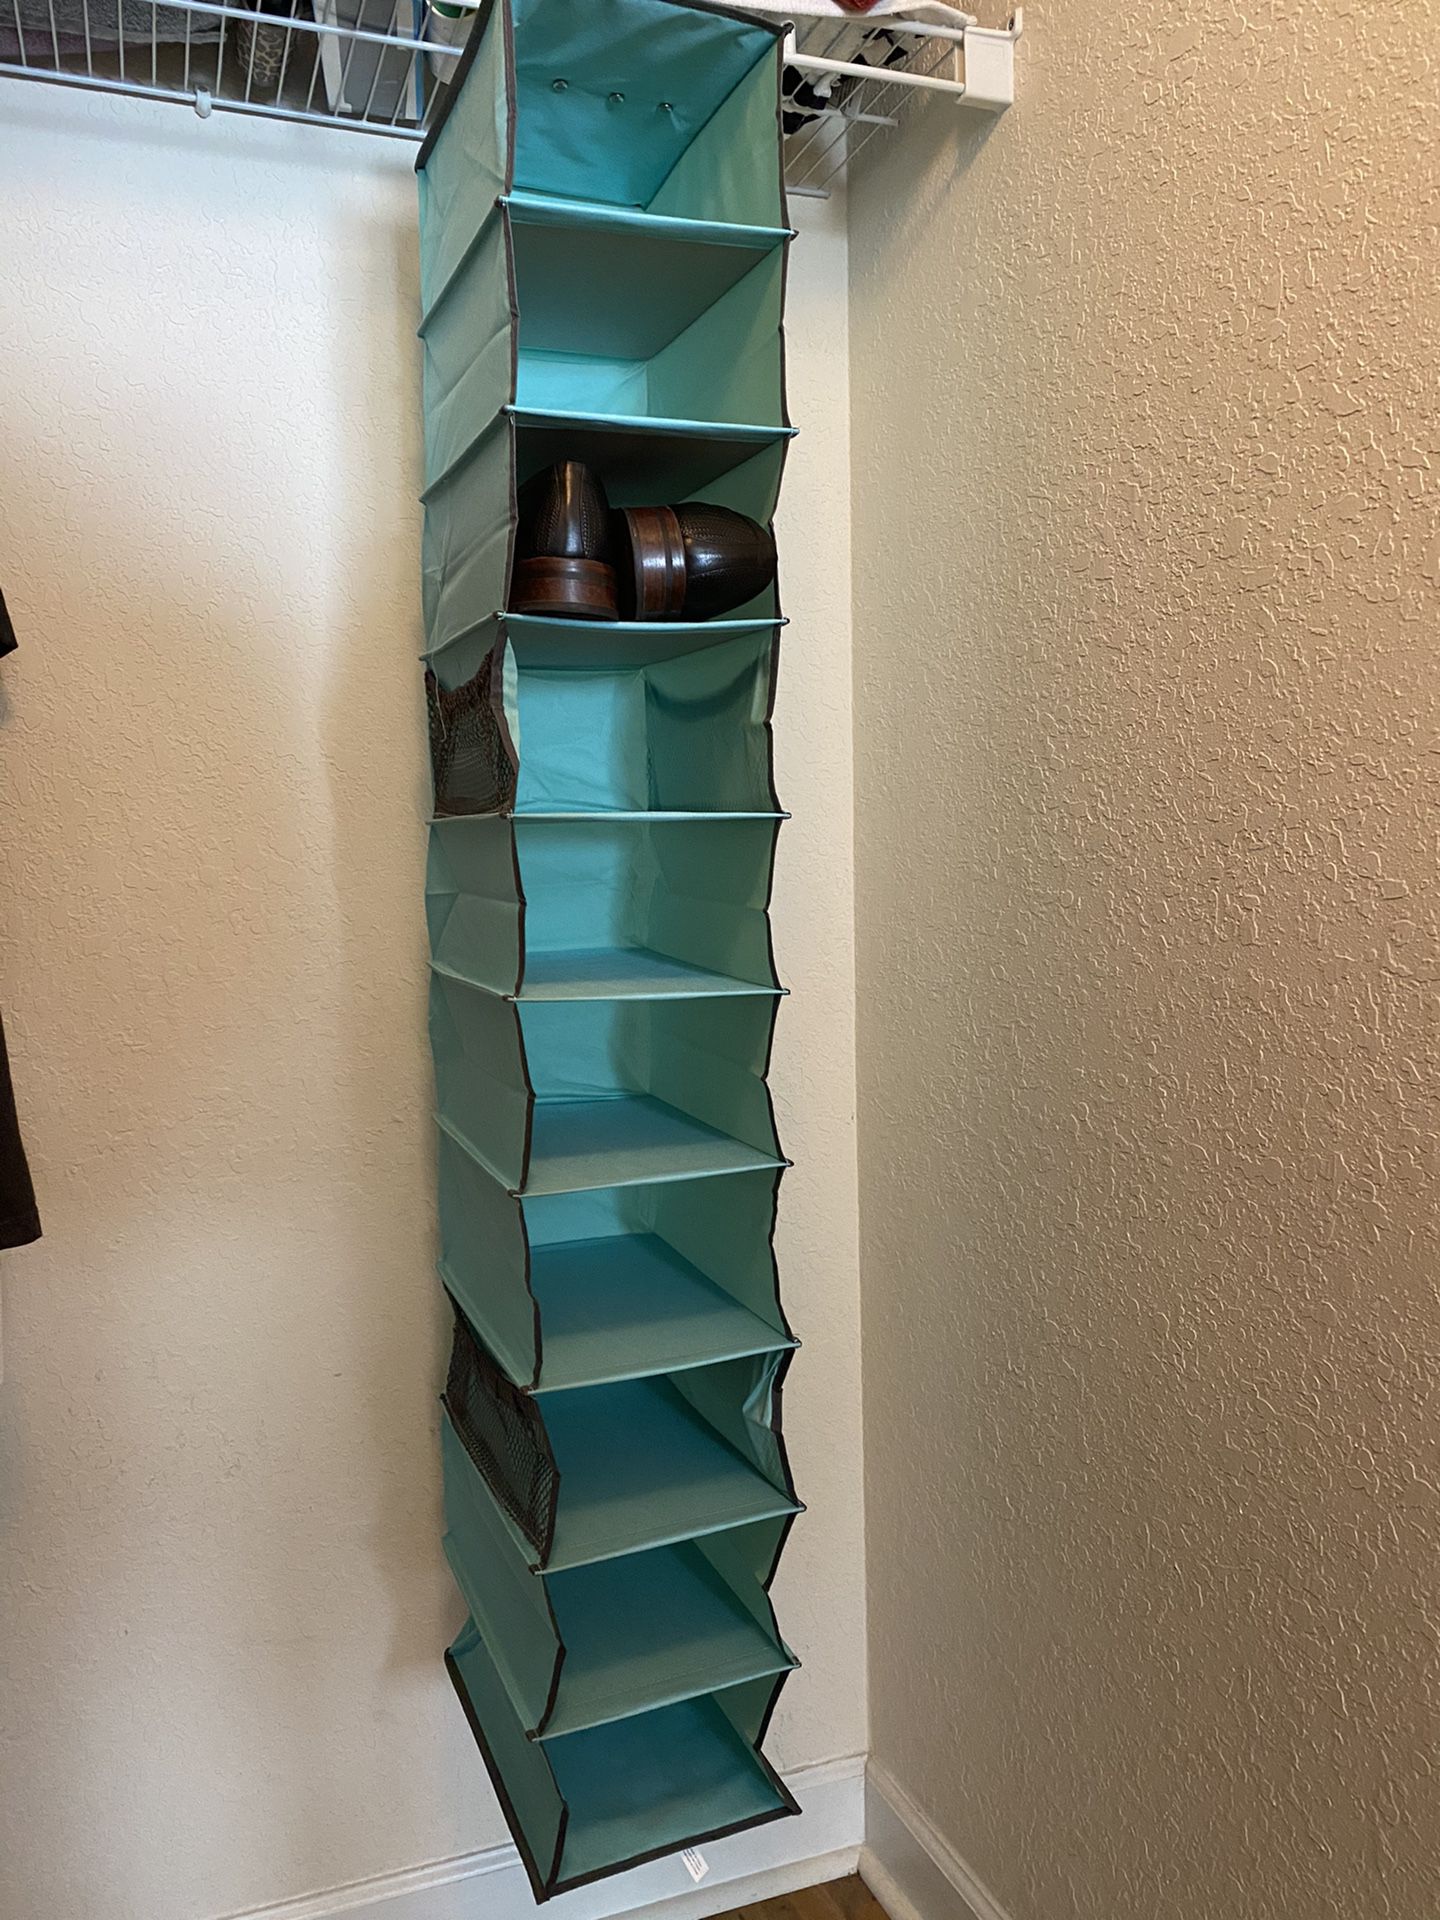 Hanging Shoe Shelves - 10 Section - Closet Organizer